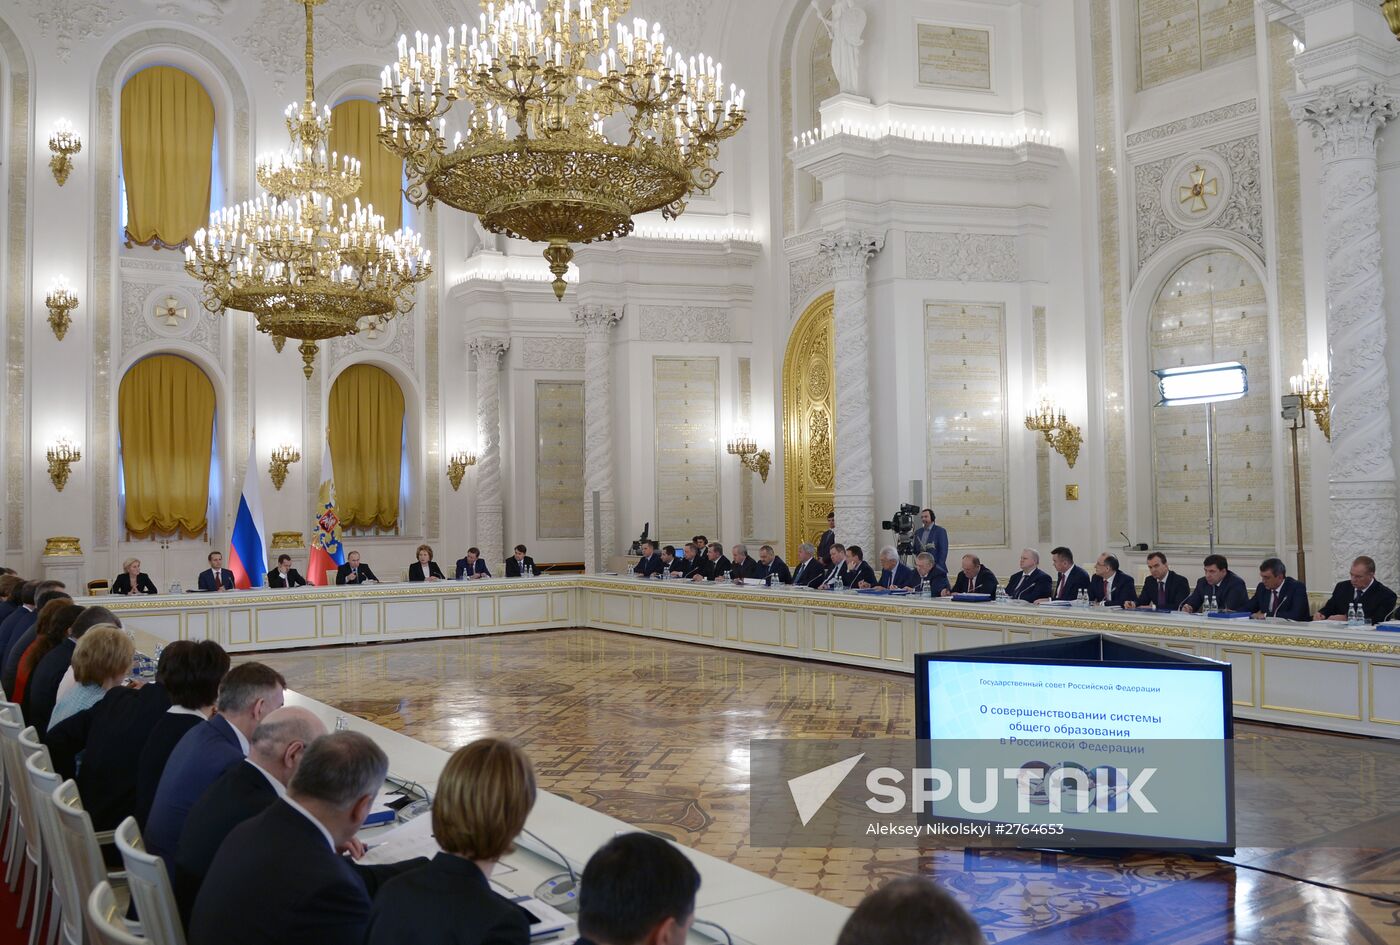 State Council meeting at Kremlin